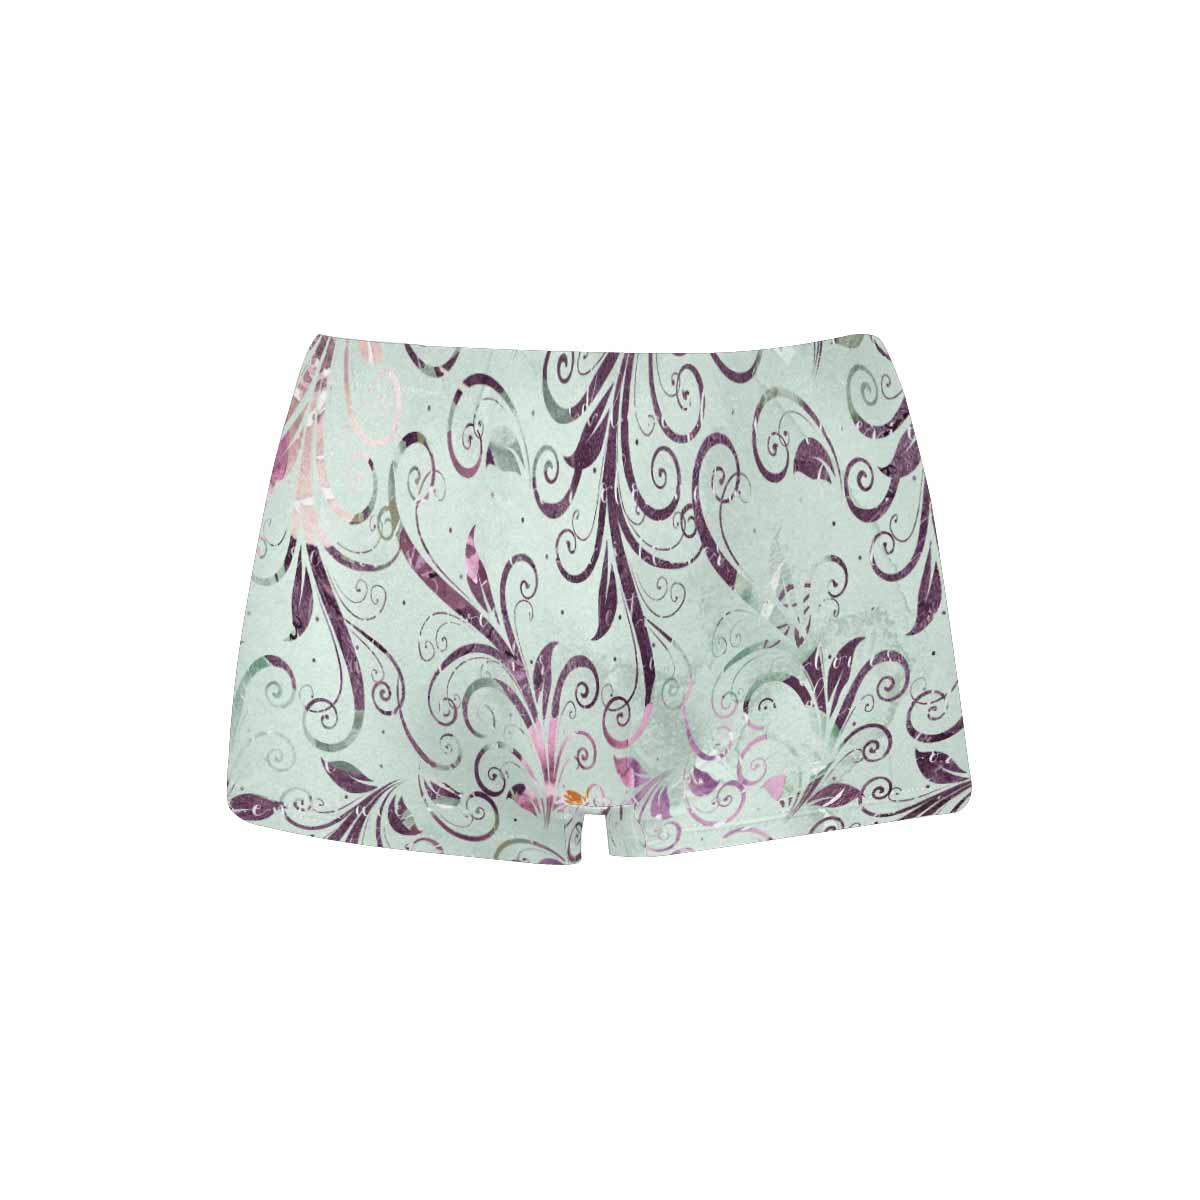 Floral 2, boyshorts, daisy dukes, pum pum shorts, panties, design 44